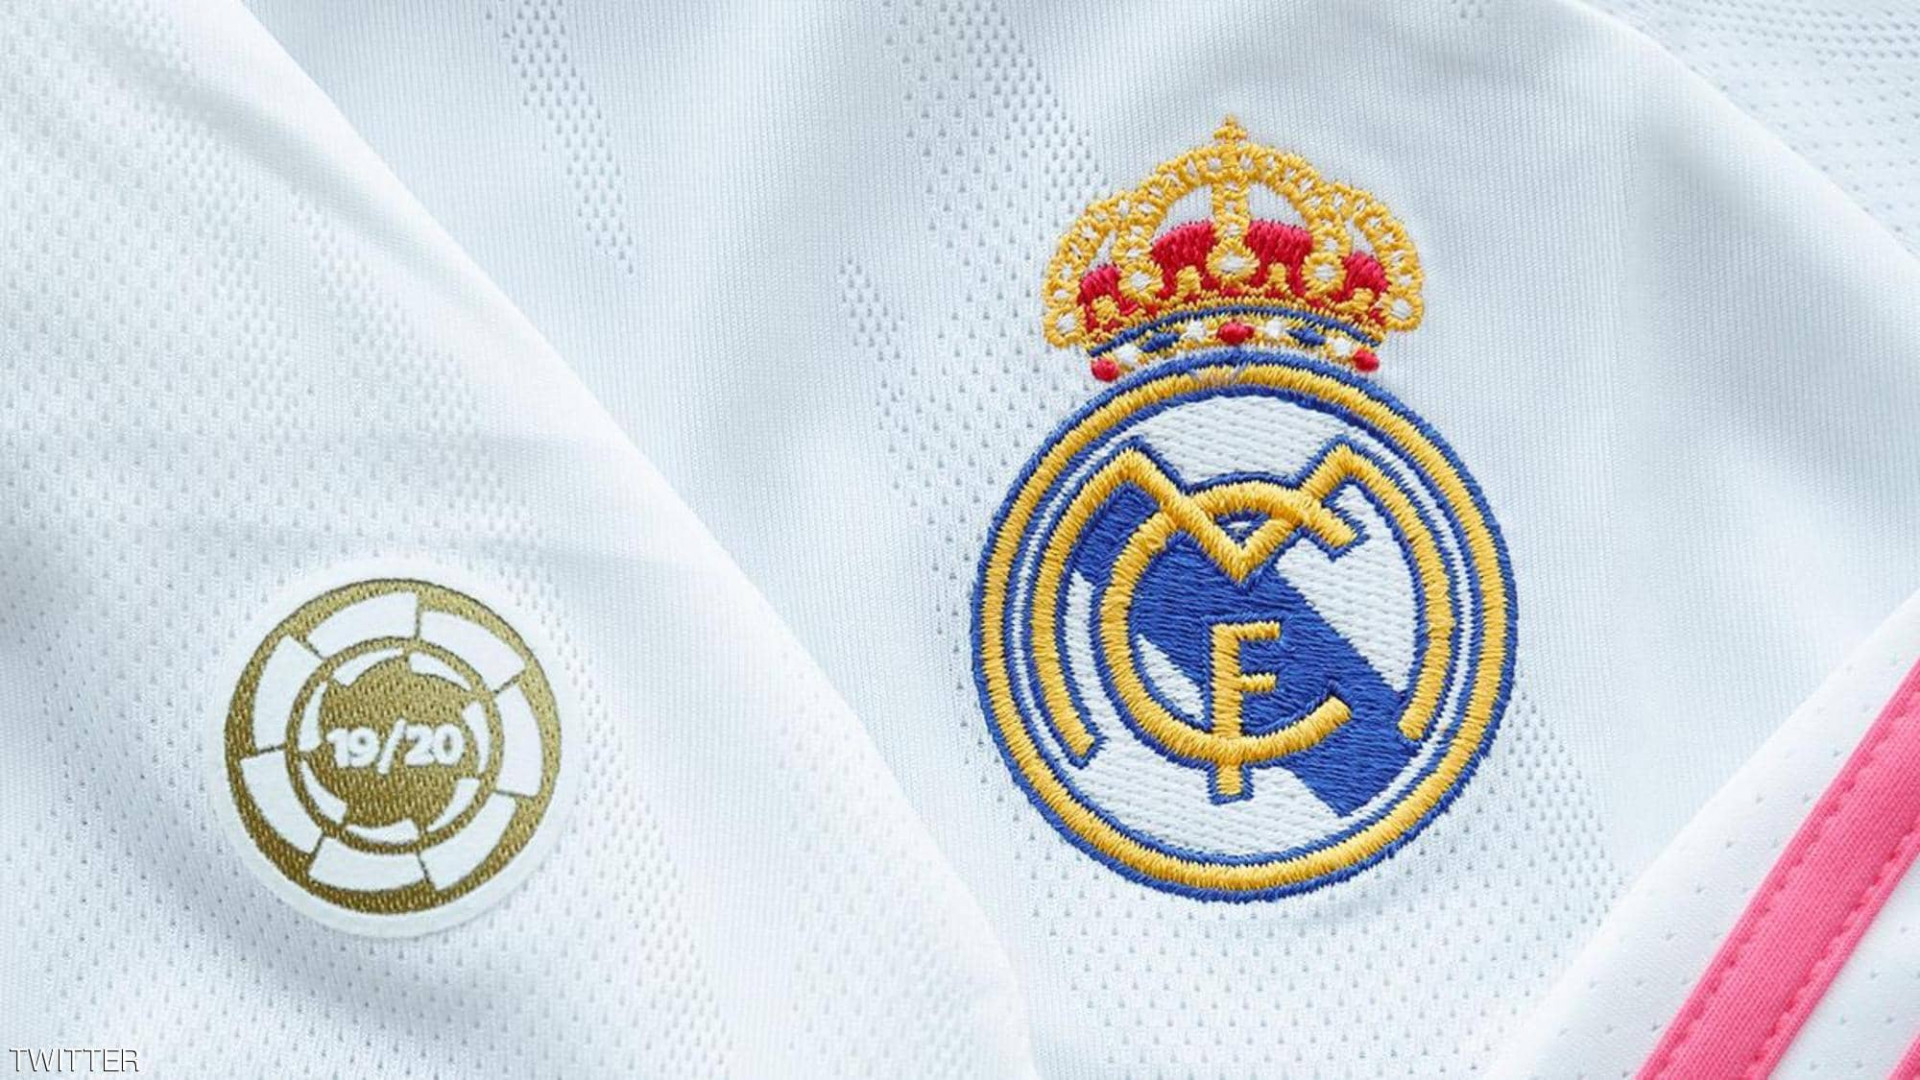 Real Madrid to visit Iraq after COVID-19 crisis passes, Spanish ambassador says